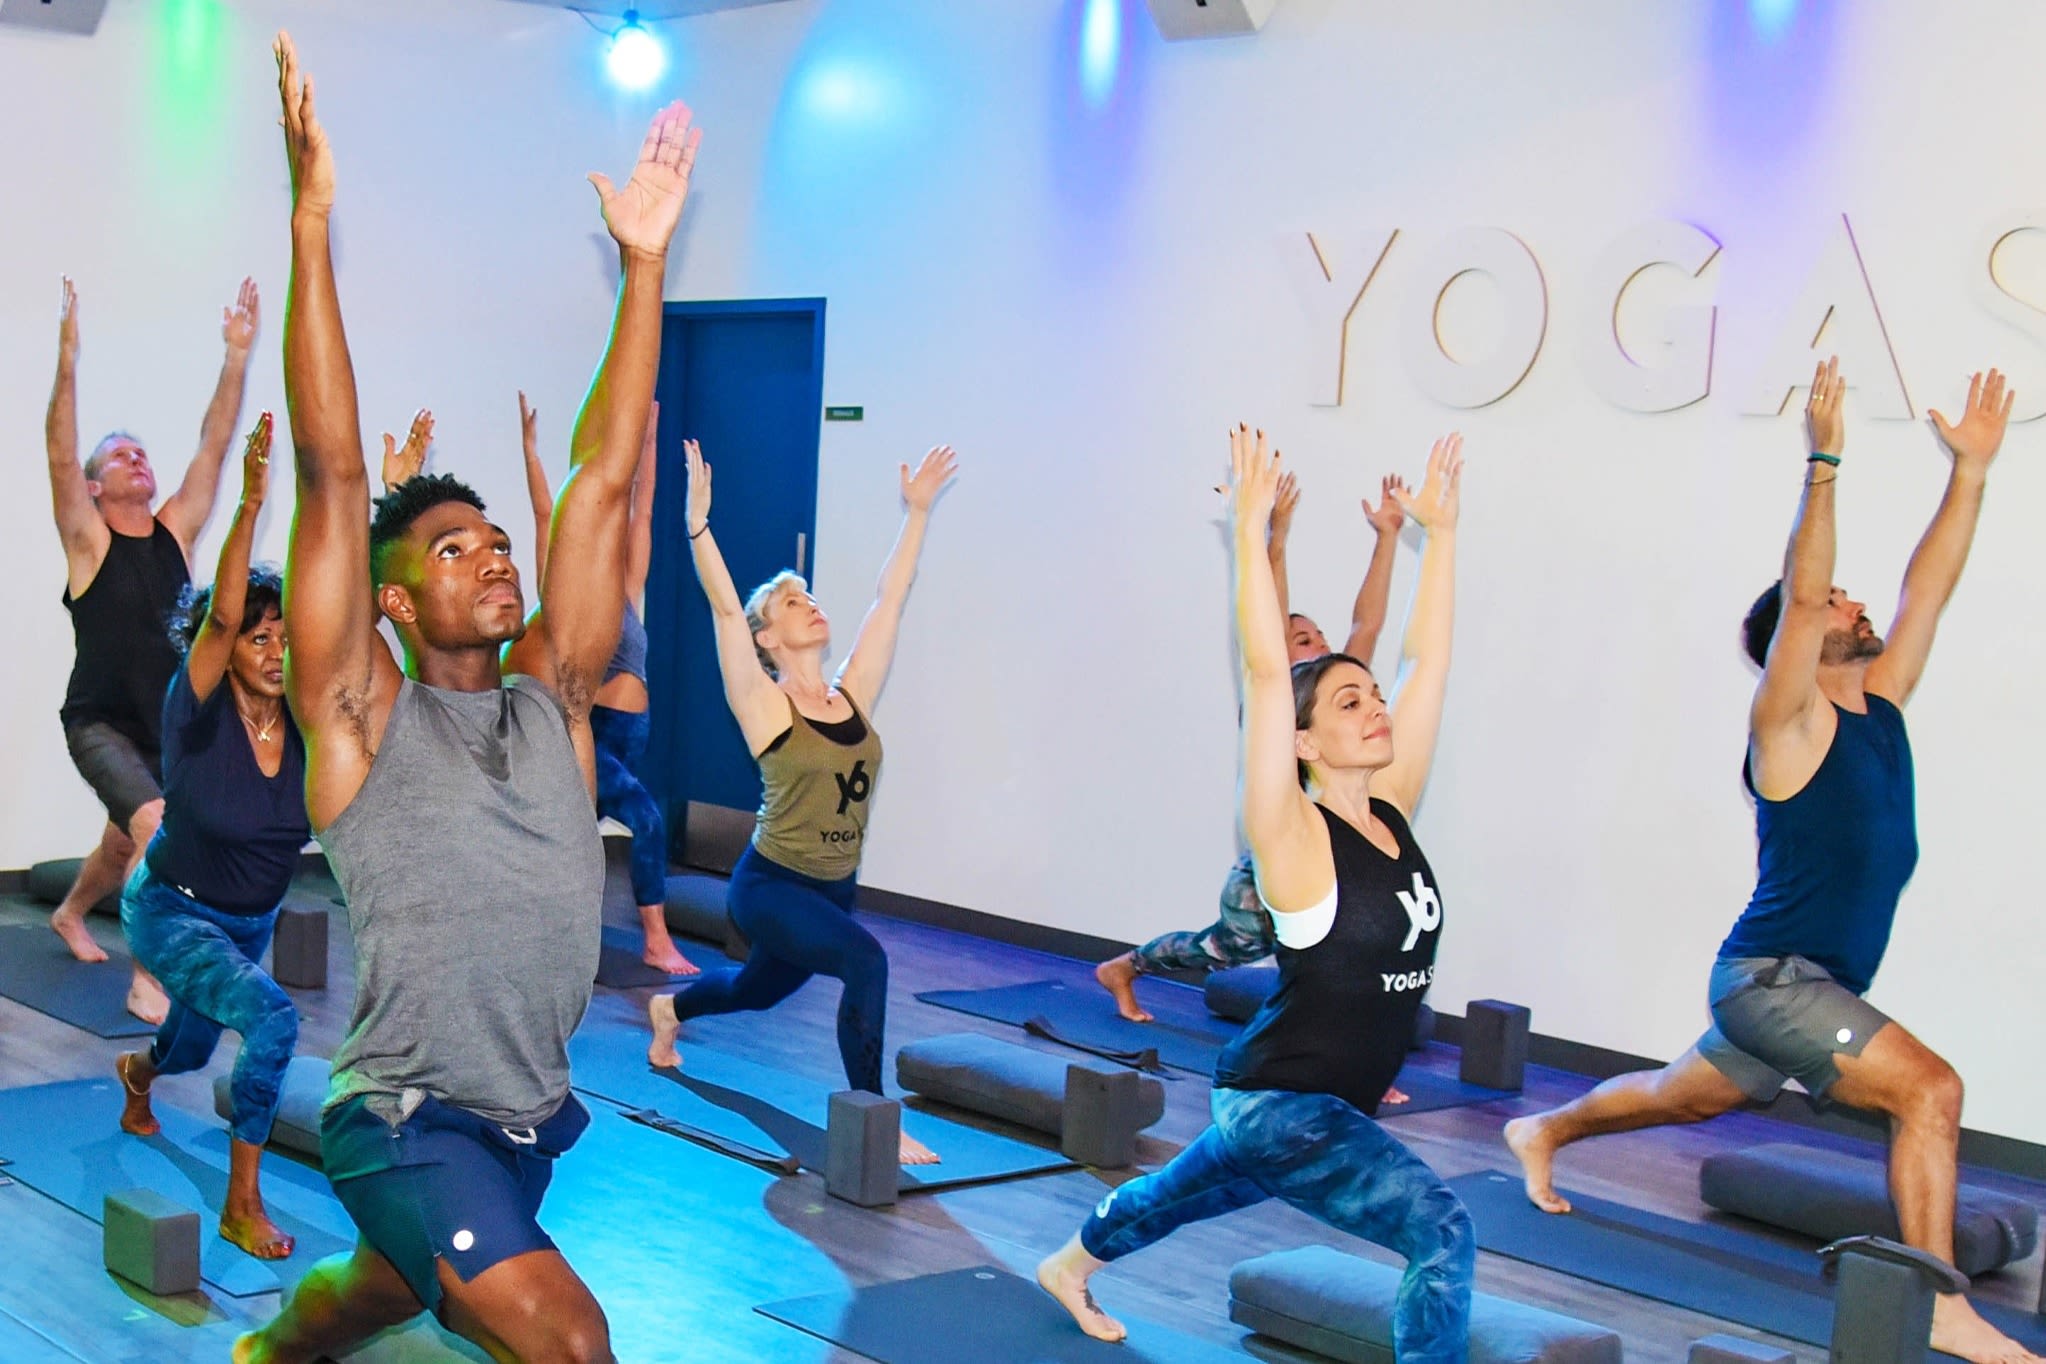 New York Yoga - Hot Studio: Read Reviews and Book Classes on ClassPass